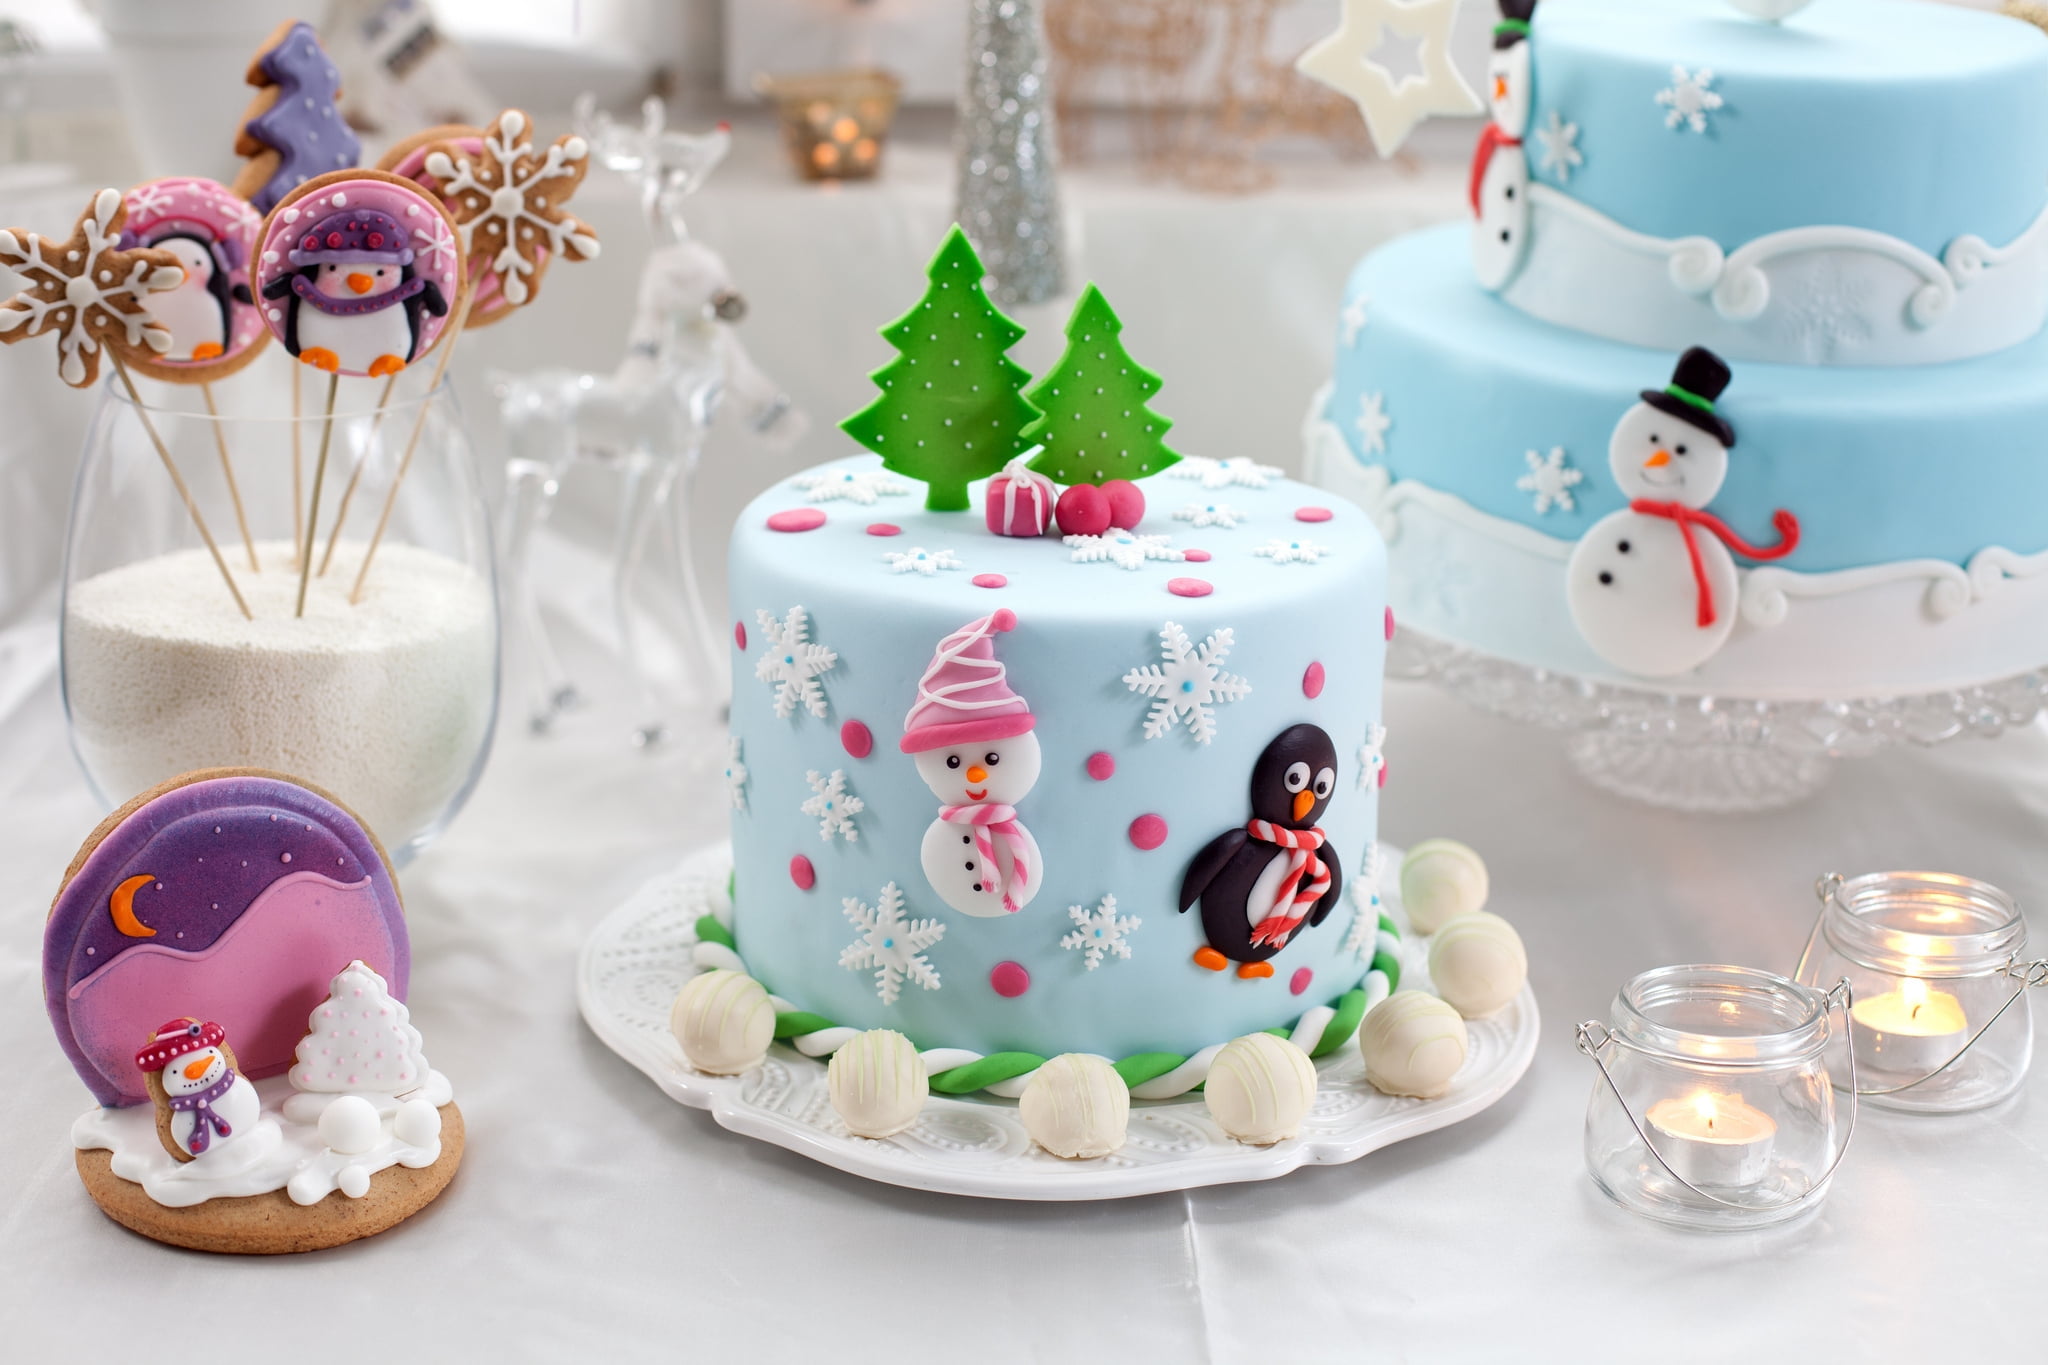 round cake, cakes, icing, delicious, christmas, dessert, celebration